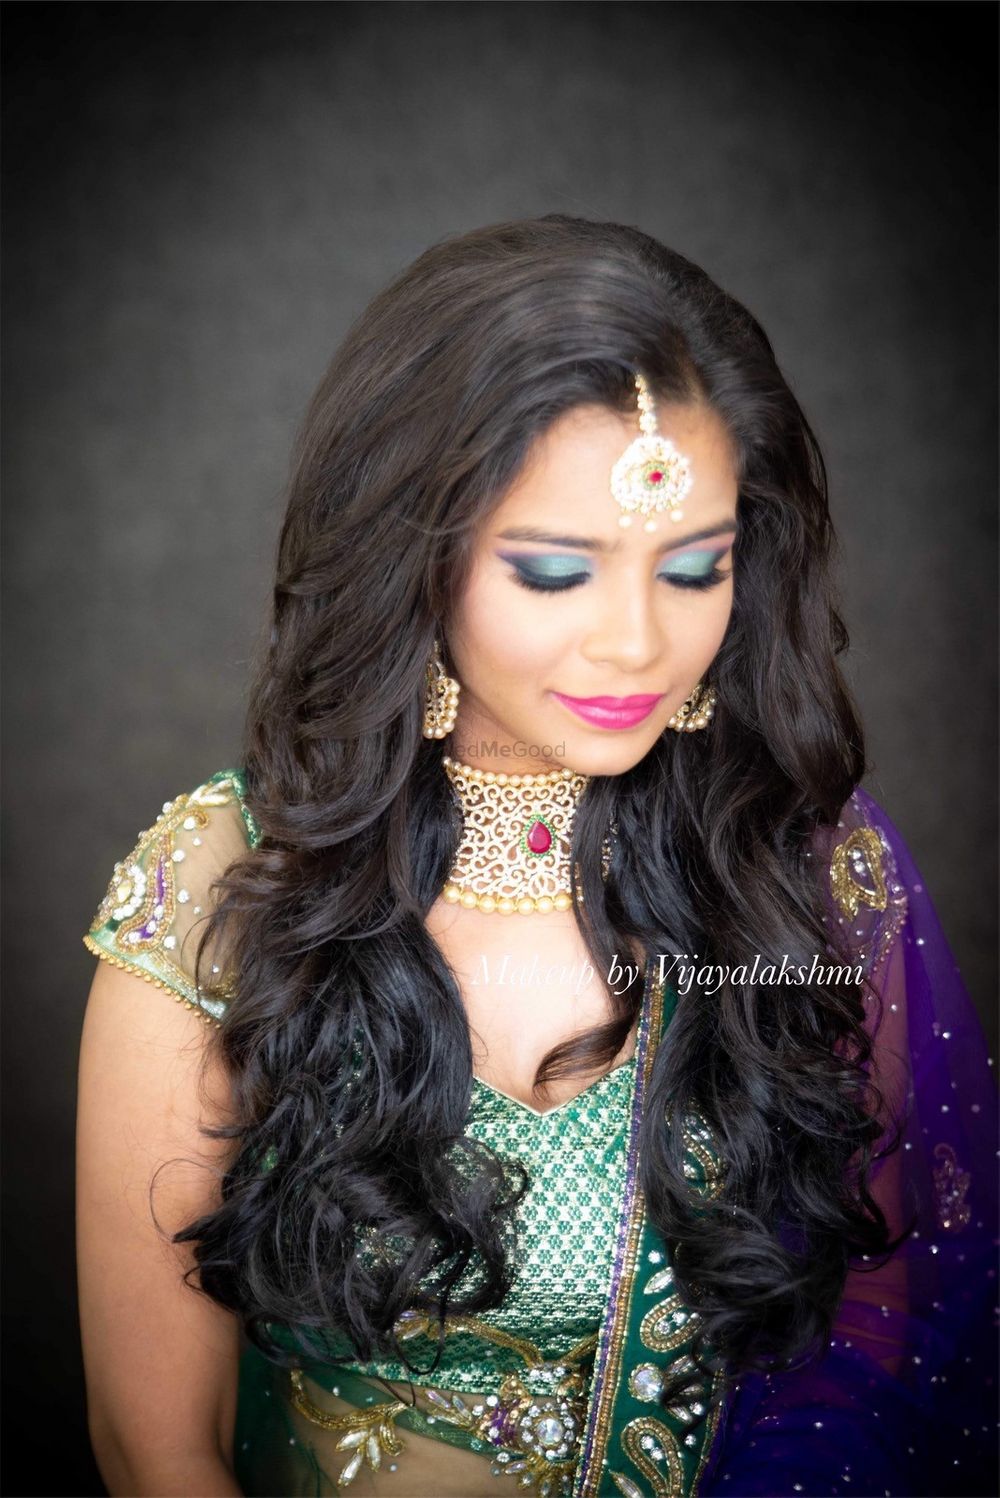 Photo By Makeup  by Vijayalakshmi - Bridal Makeup